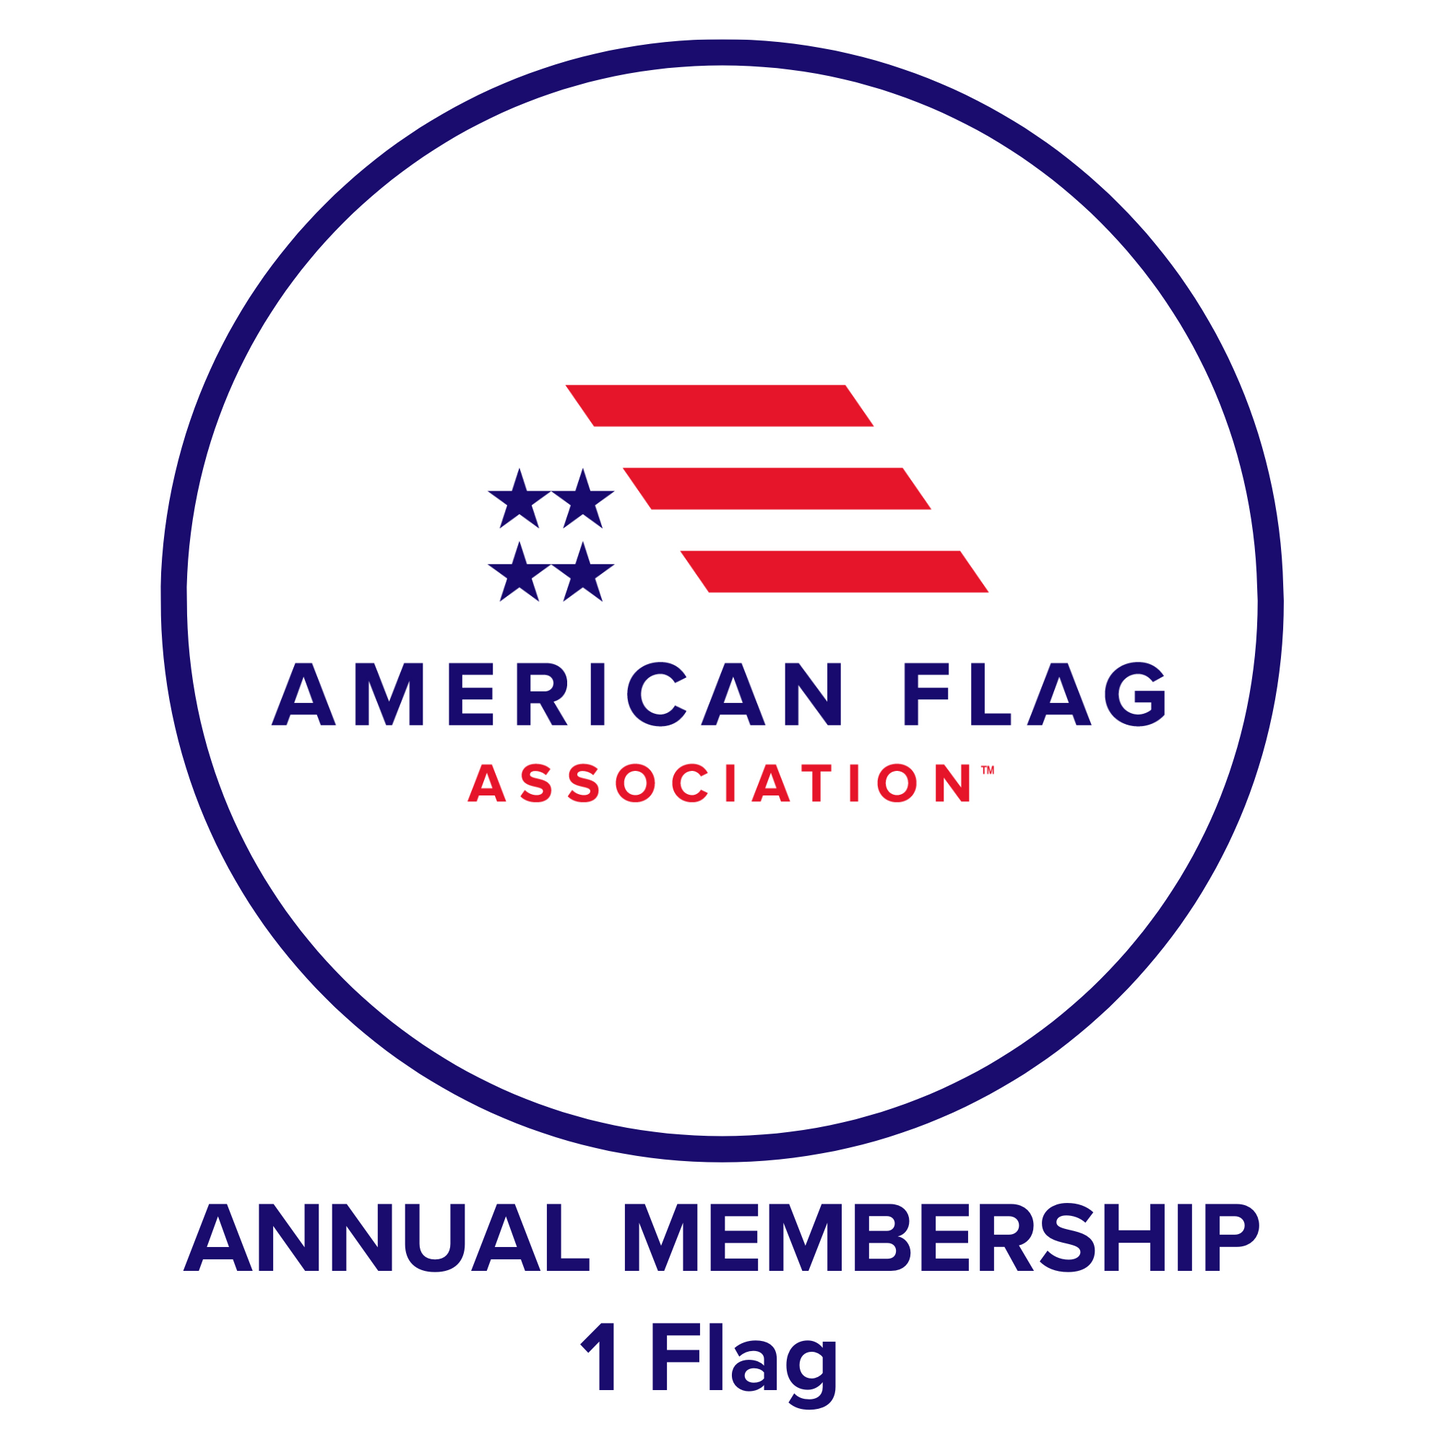 One (1) Flag - Annual Membership